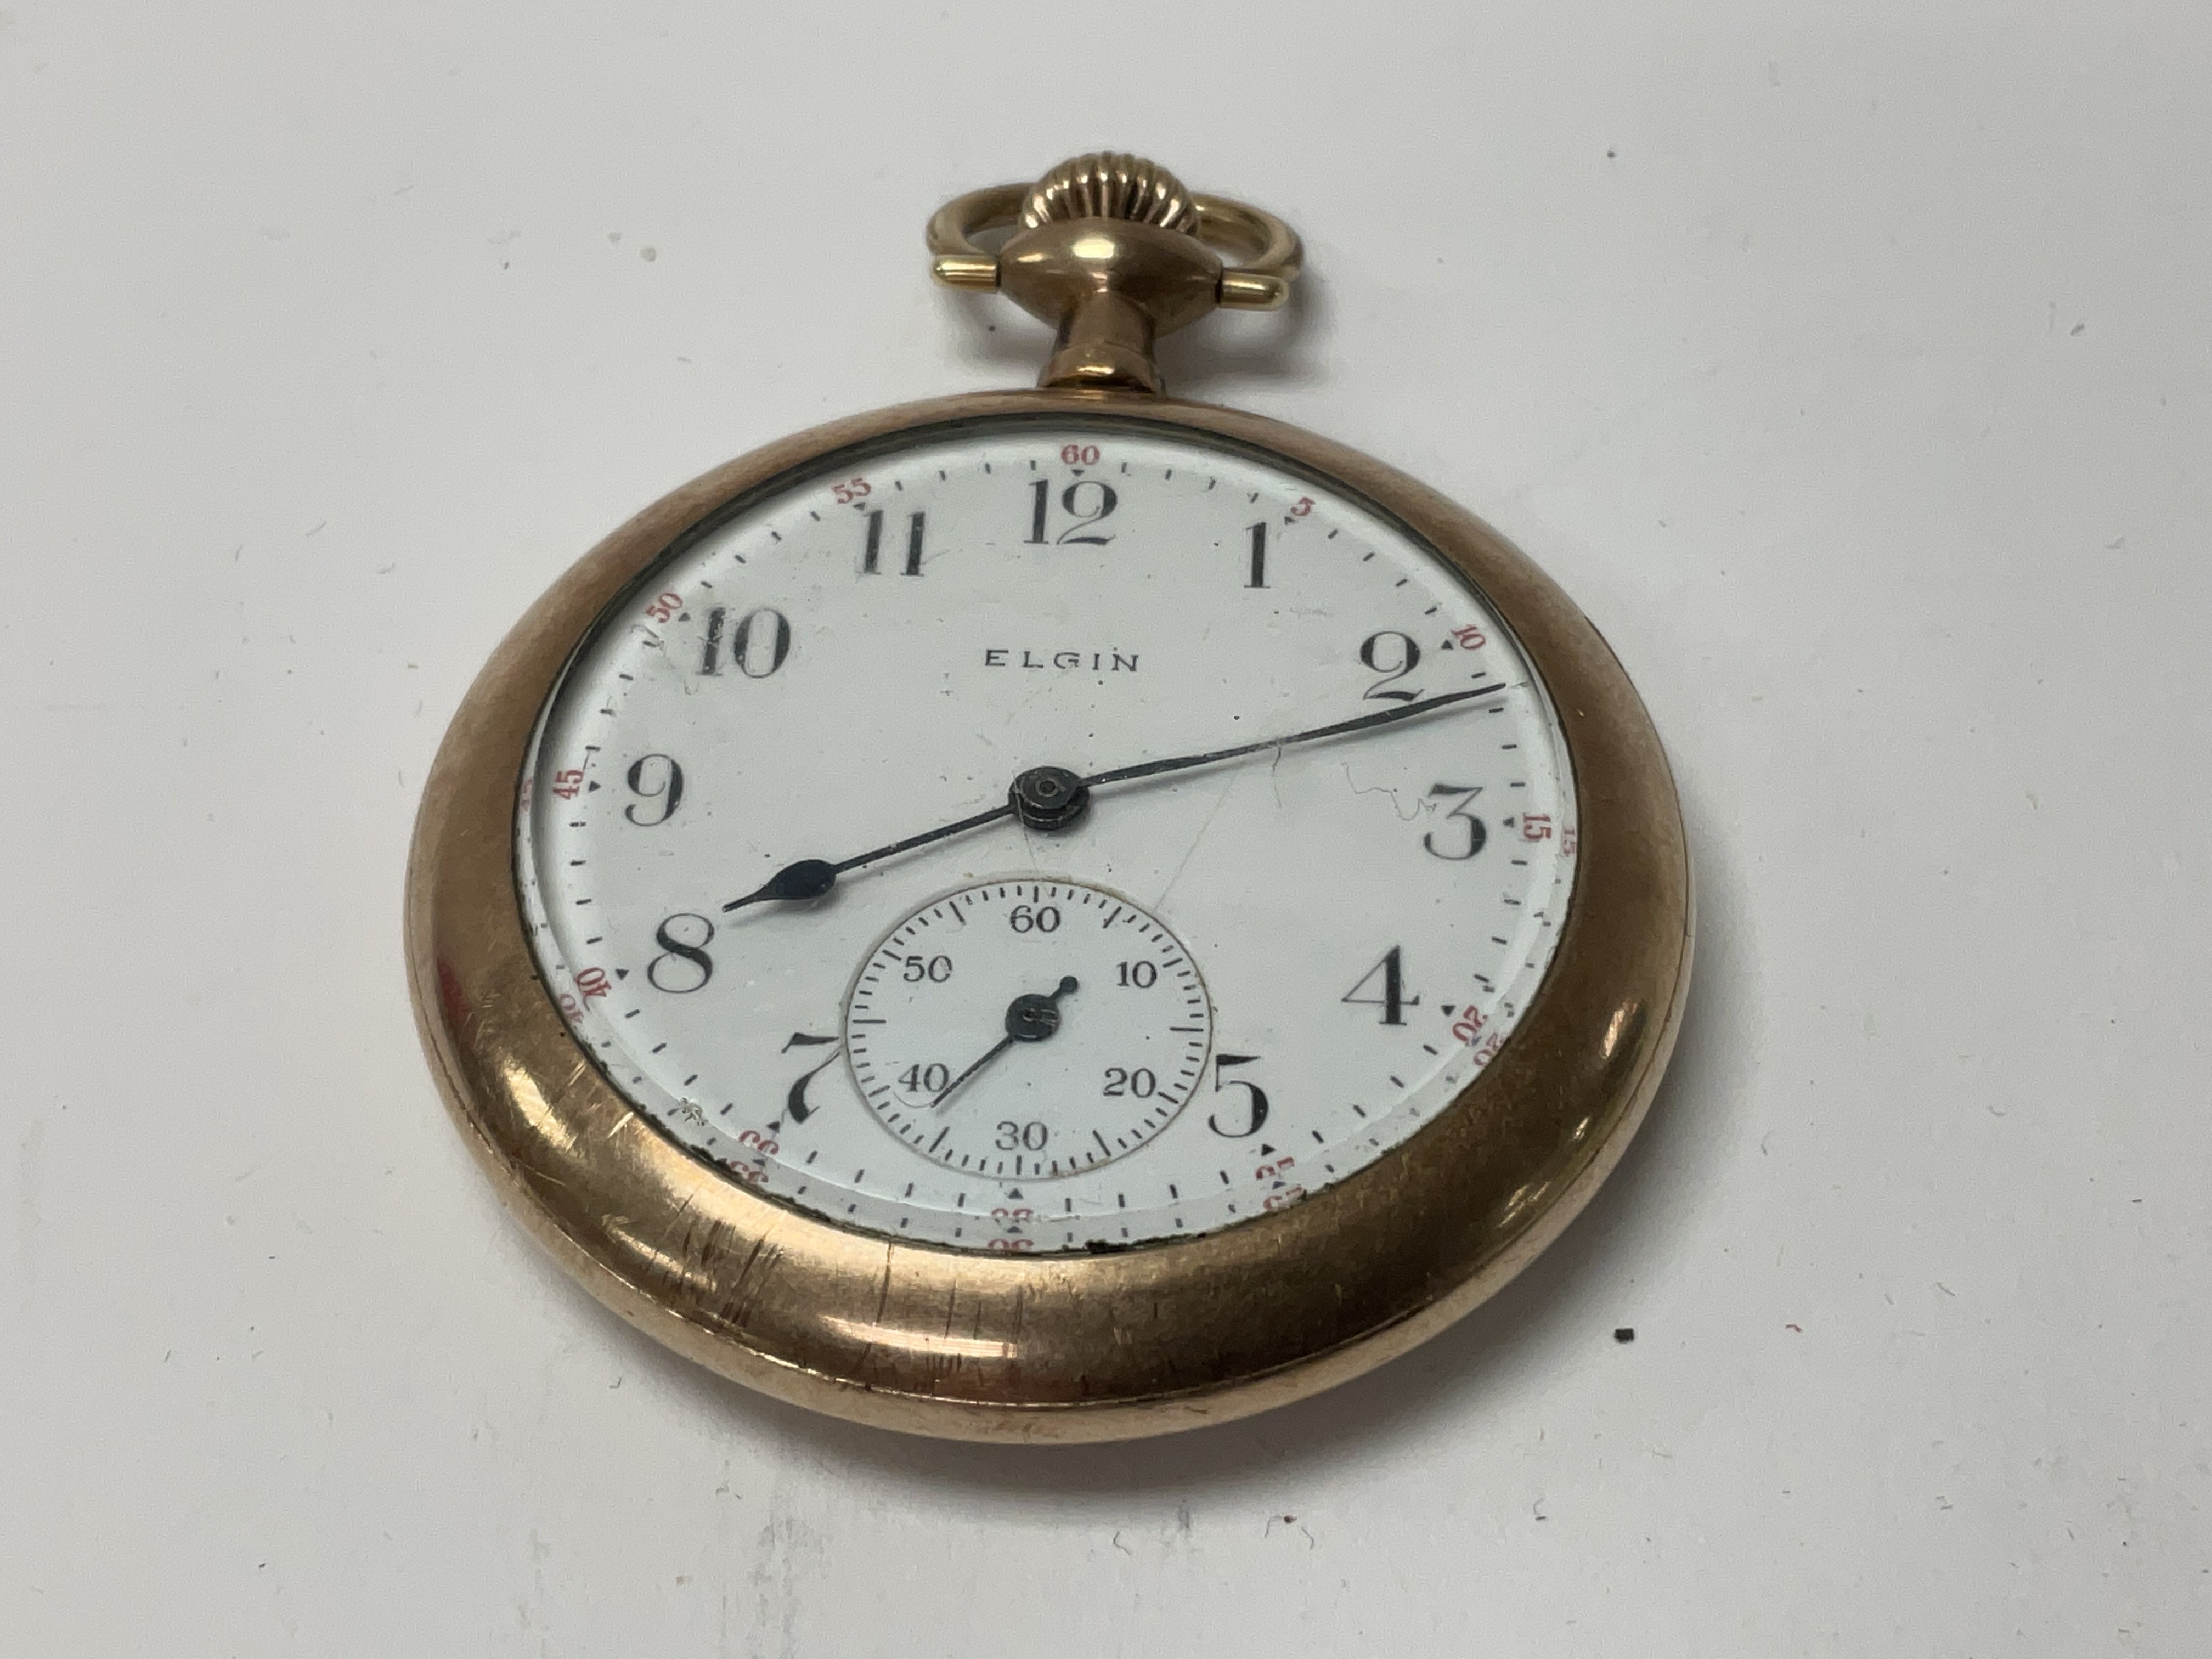 A vintage gold plated Elgin pocket watch